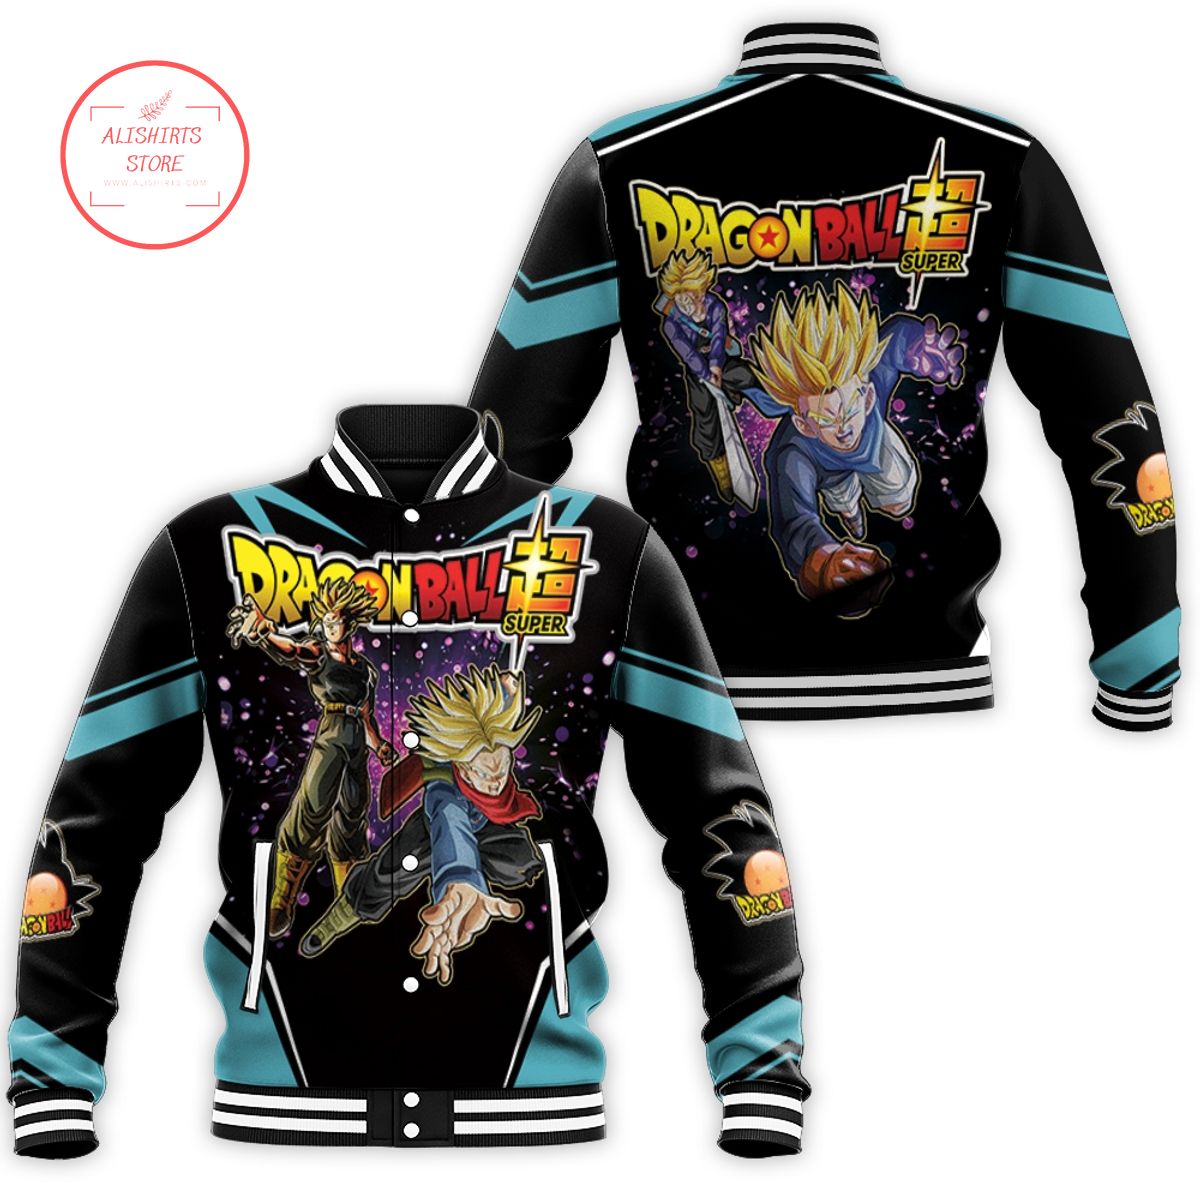 Trunks Super Saiyan Rage Dragonball varsity jacket